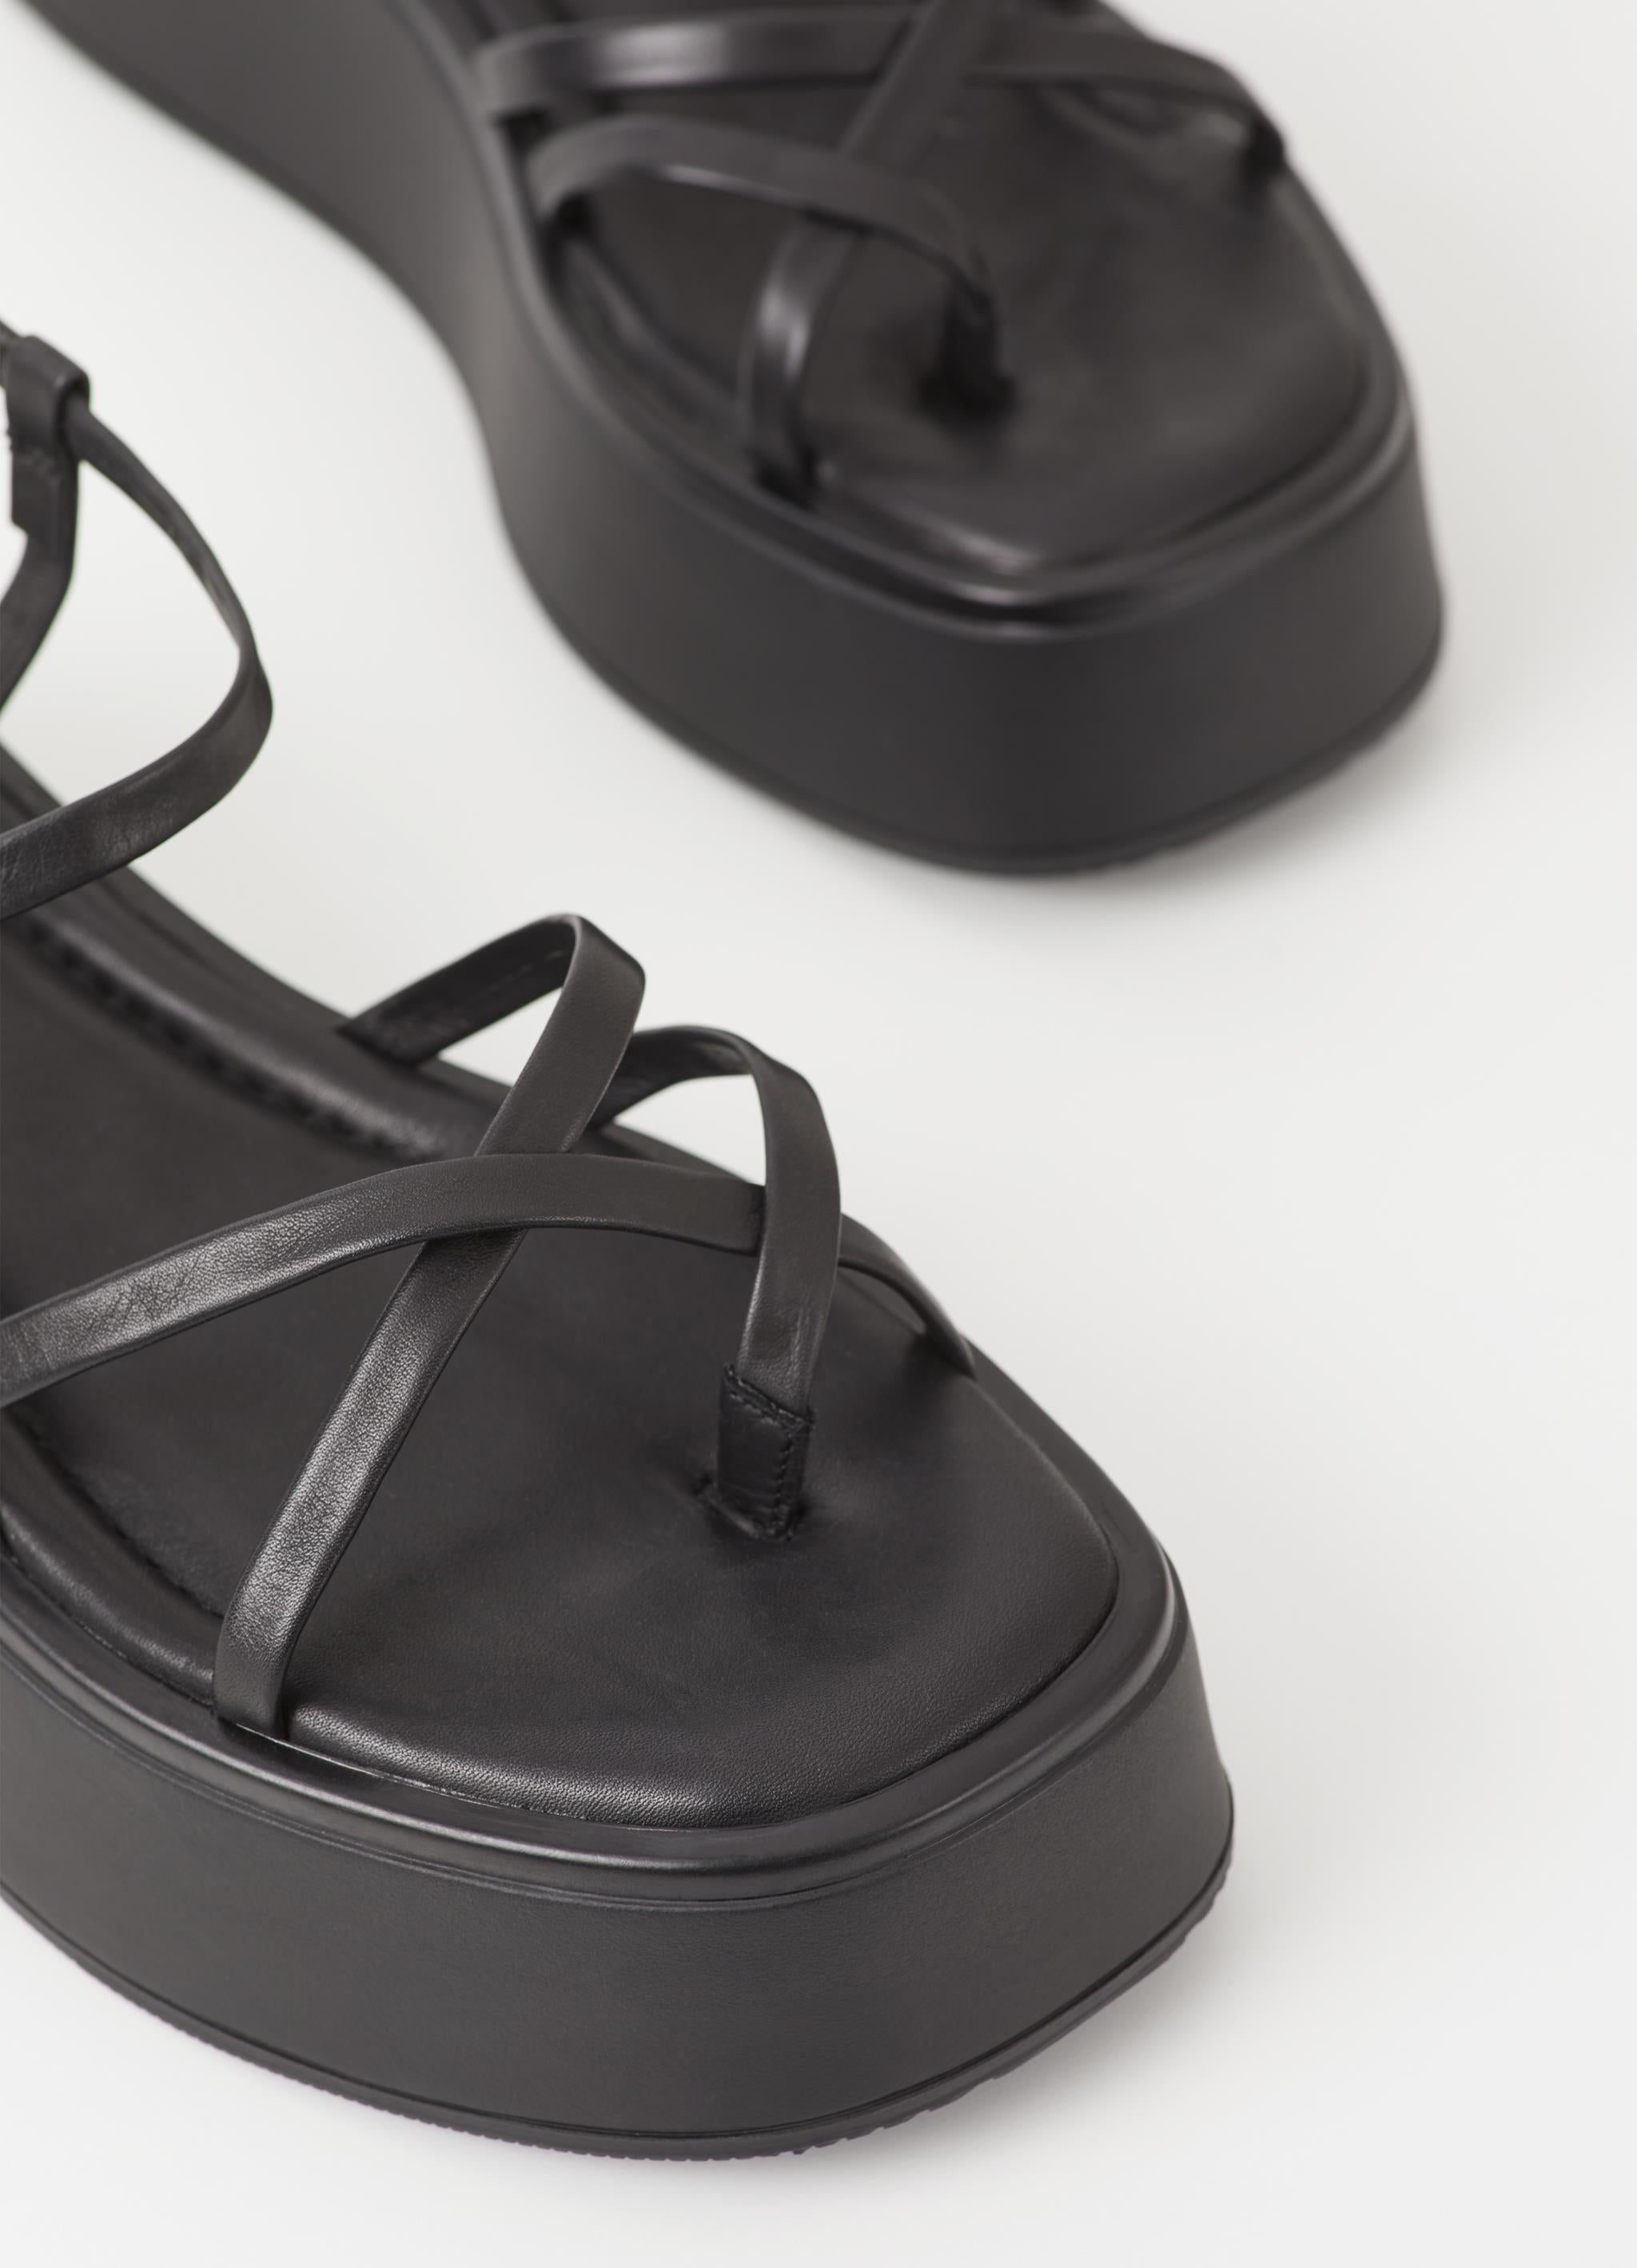 Platform black strappy sandal